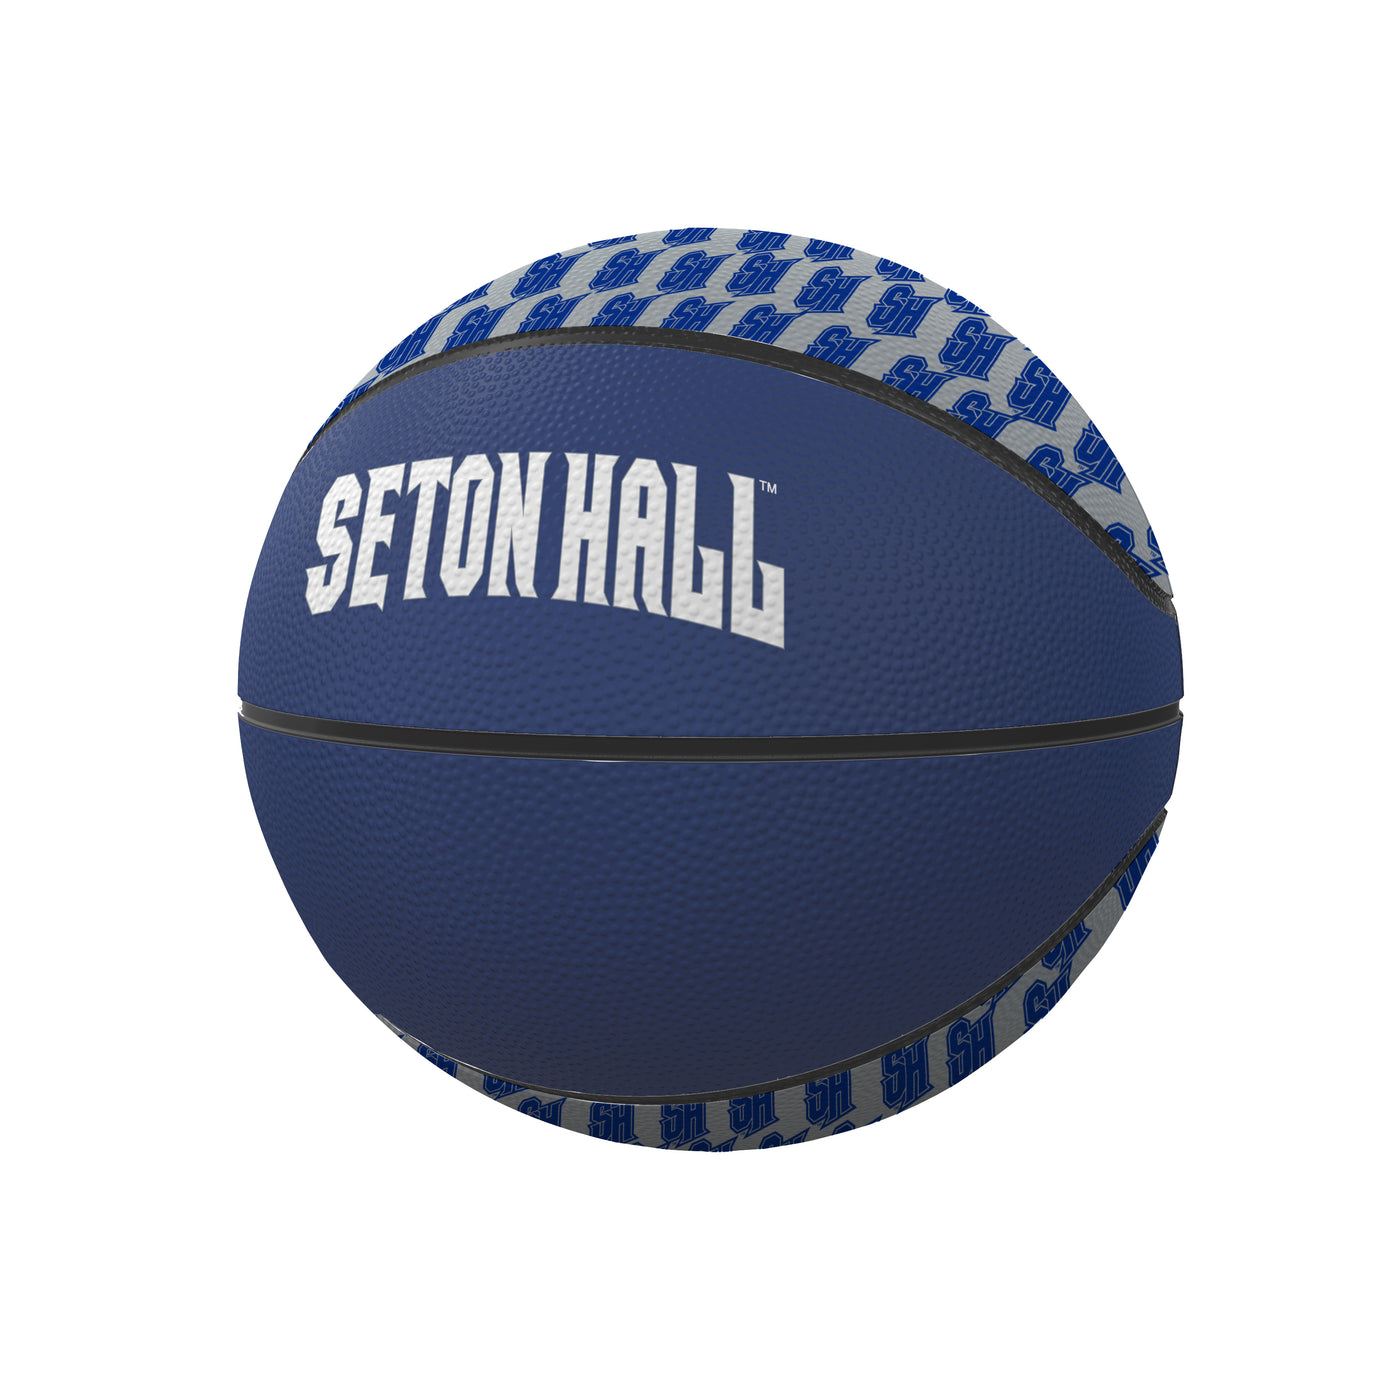 Seton Hall Mini Size Rubber Basketball